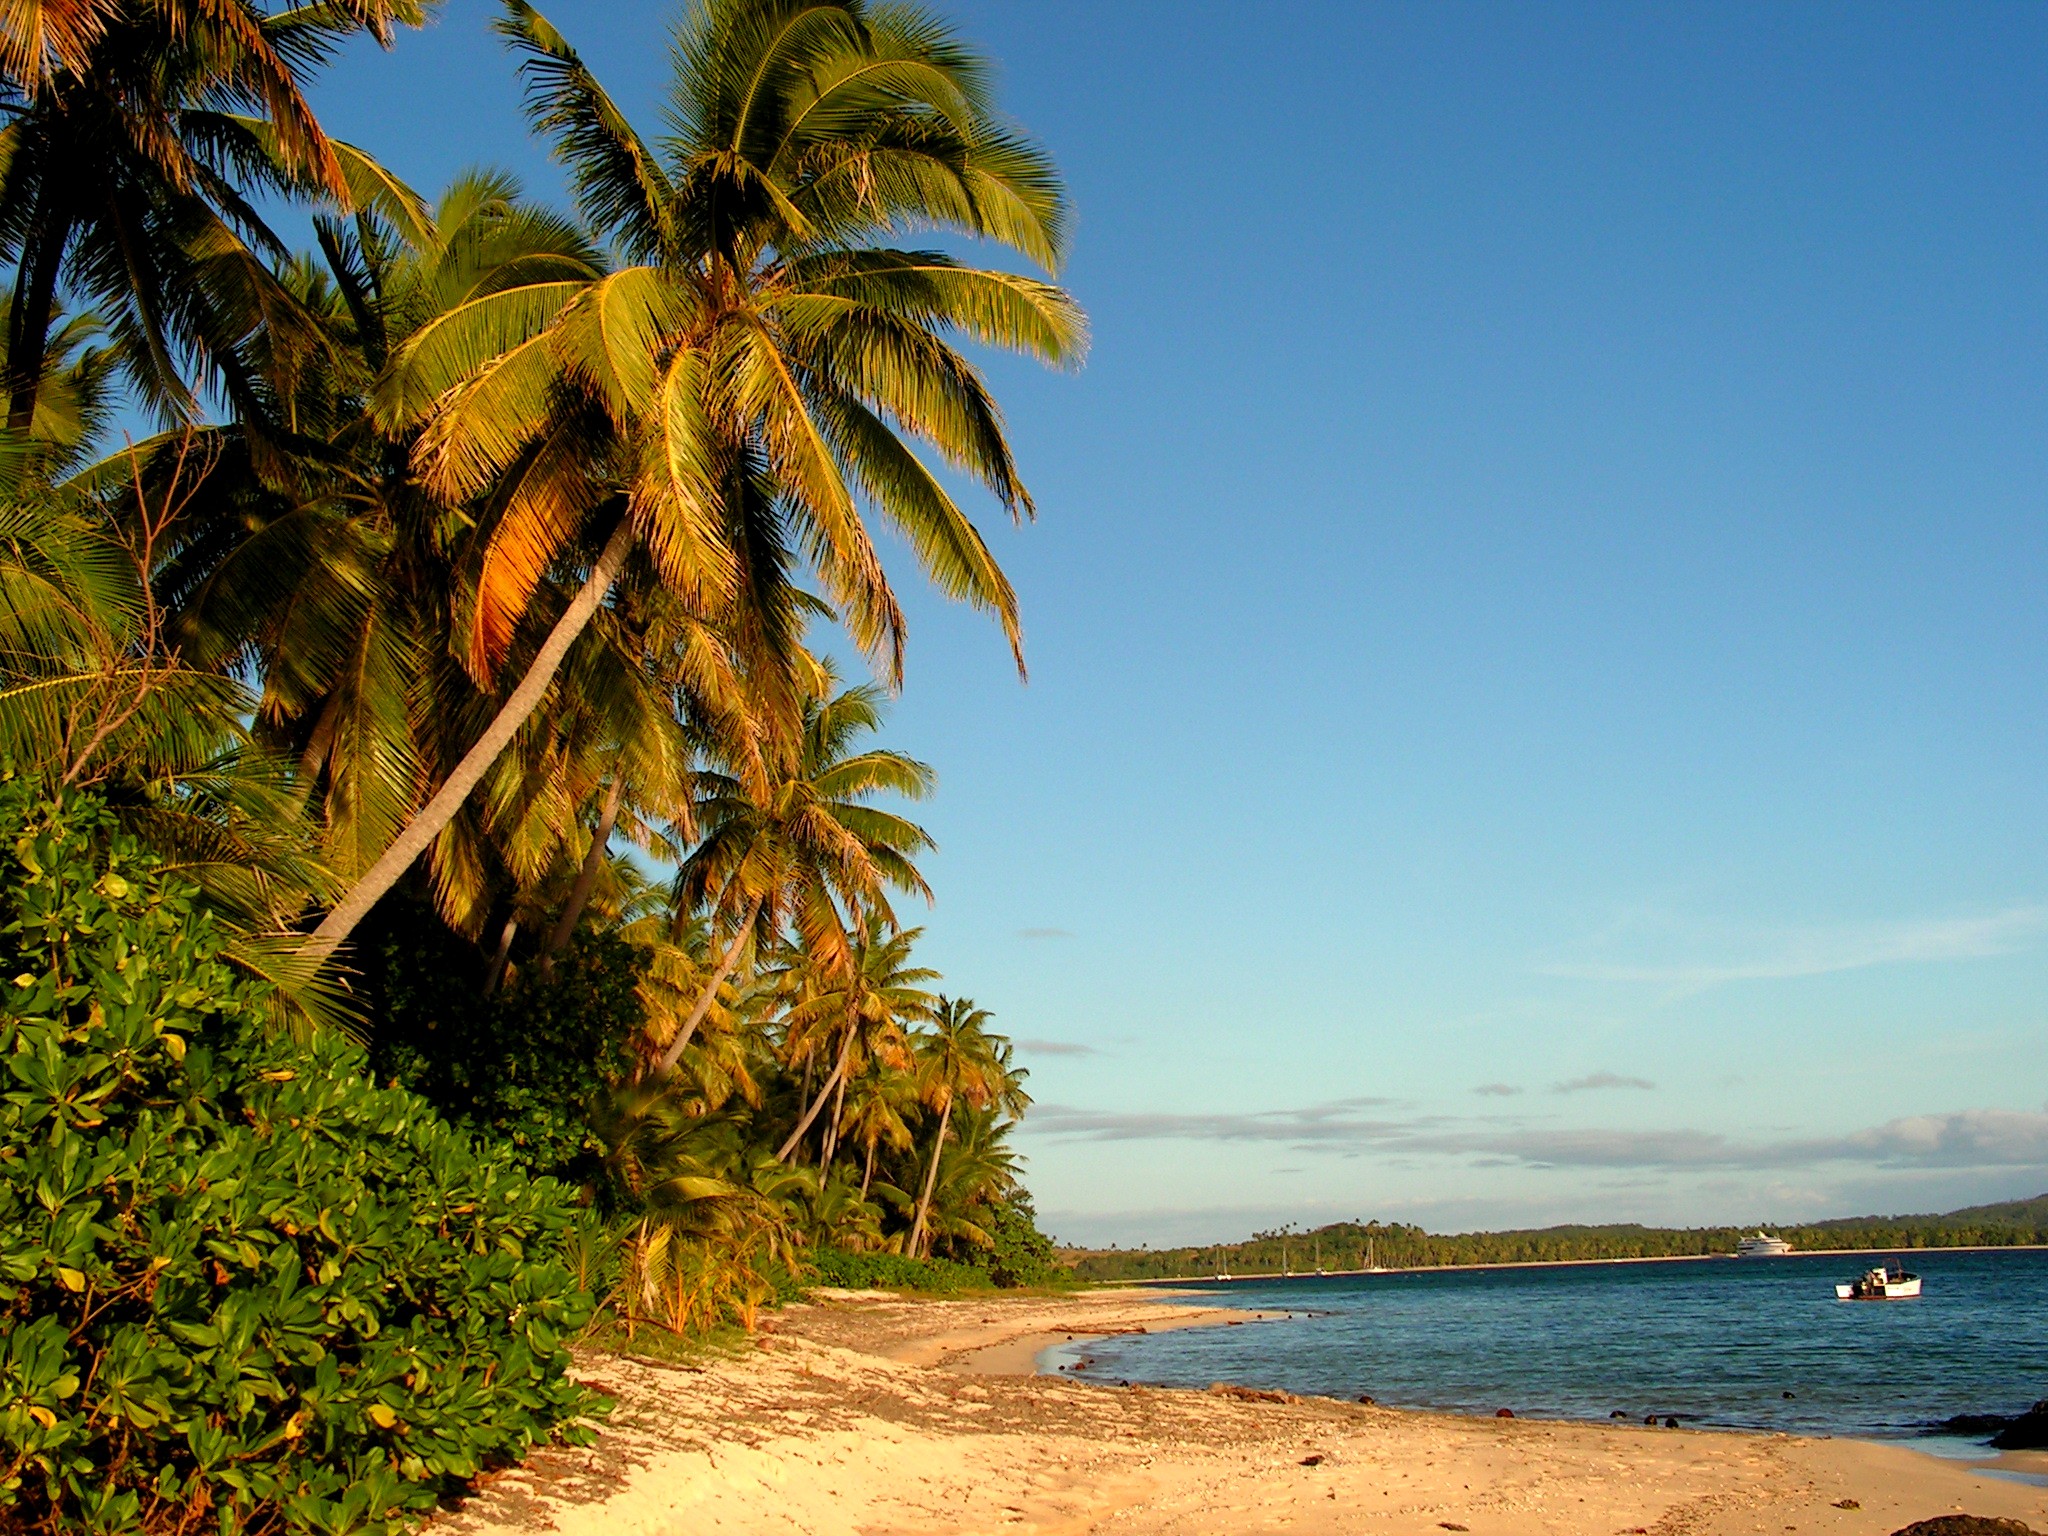 Coconut palms line the beaches of Fiji